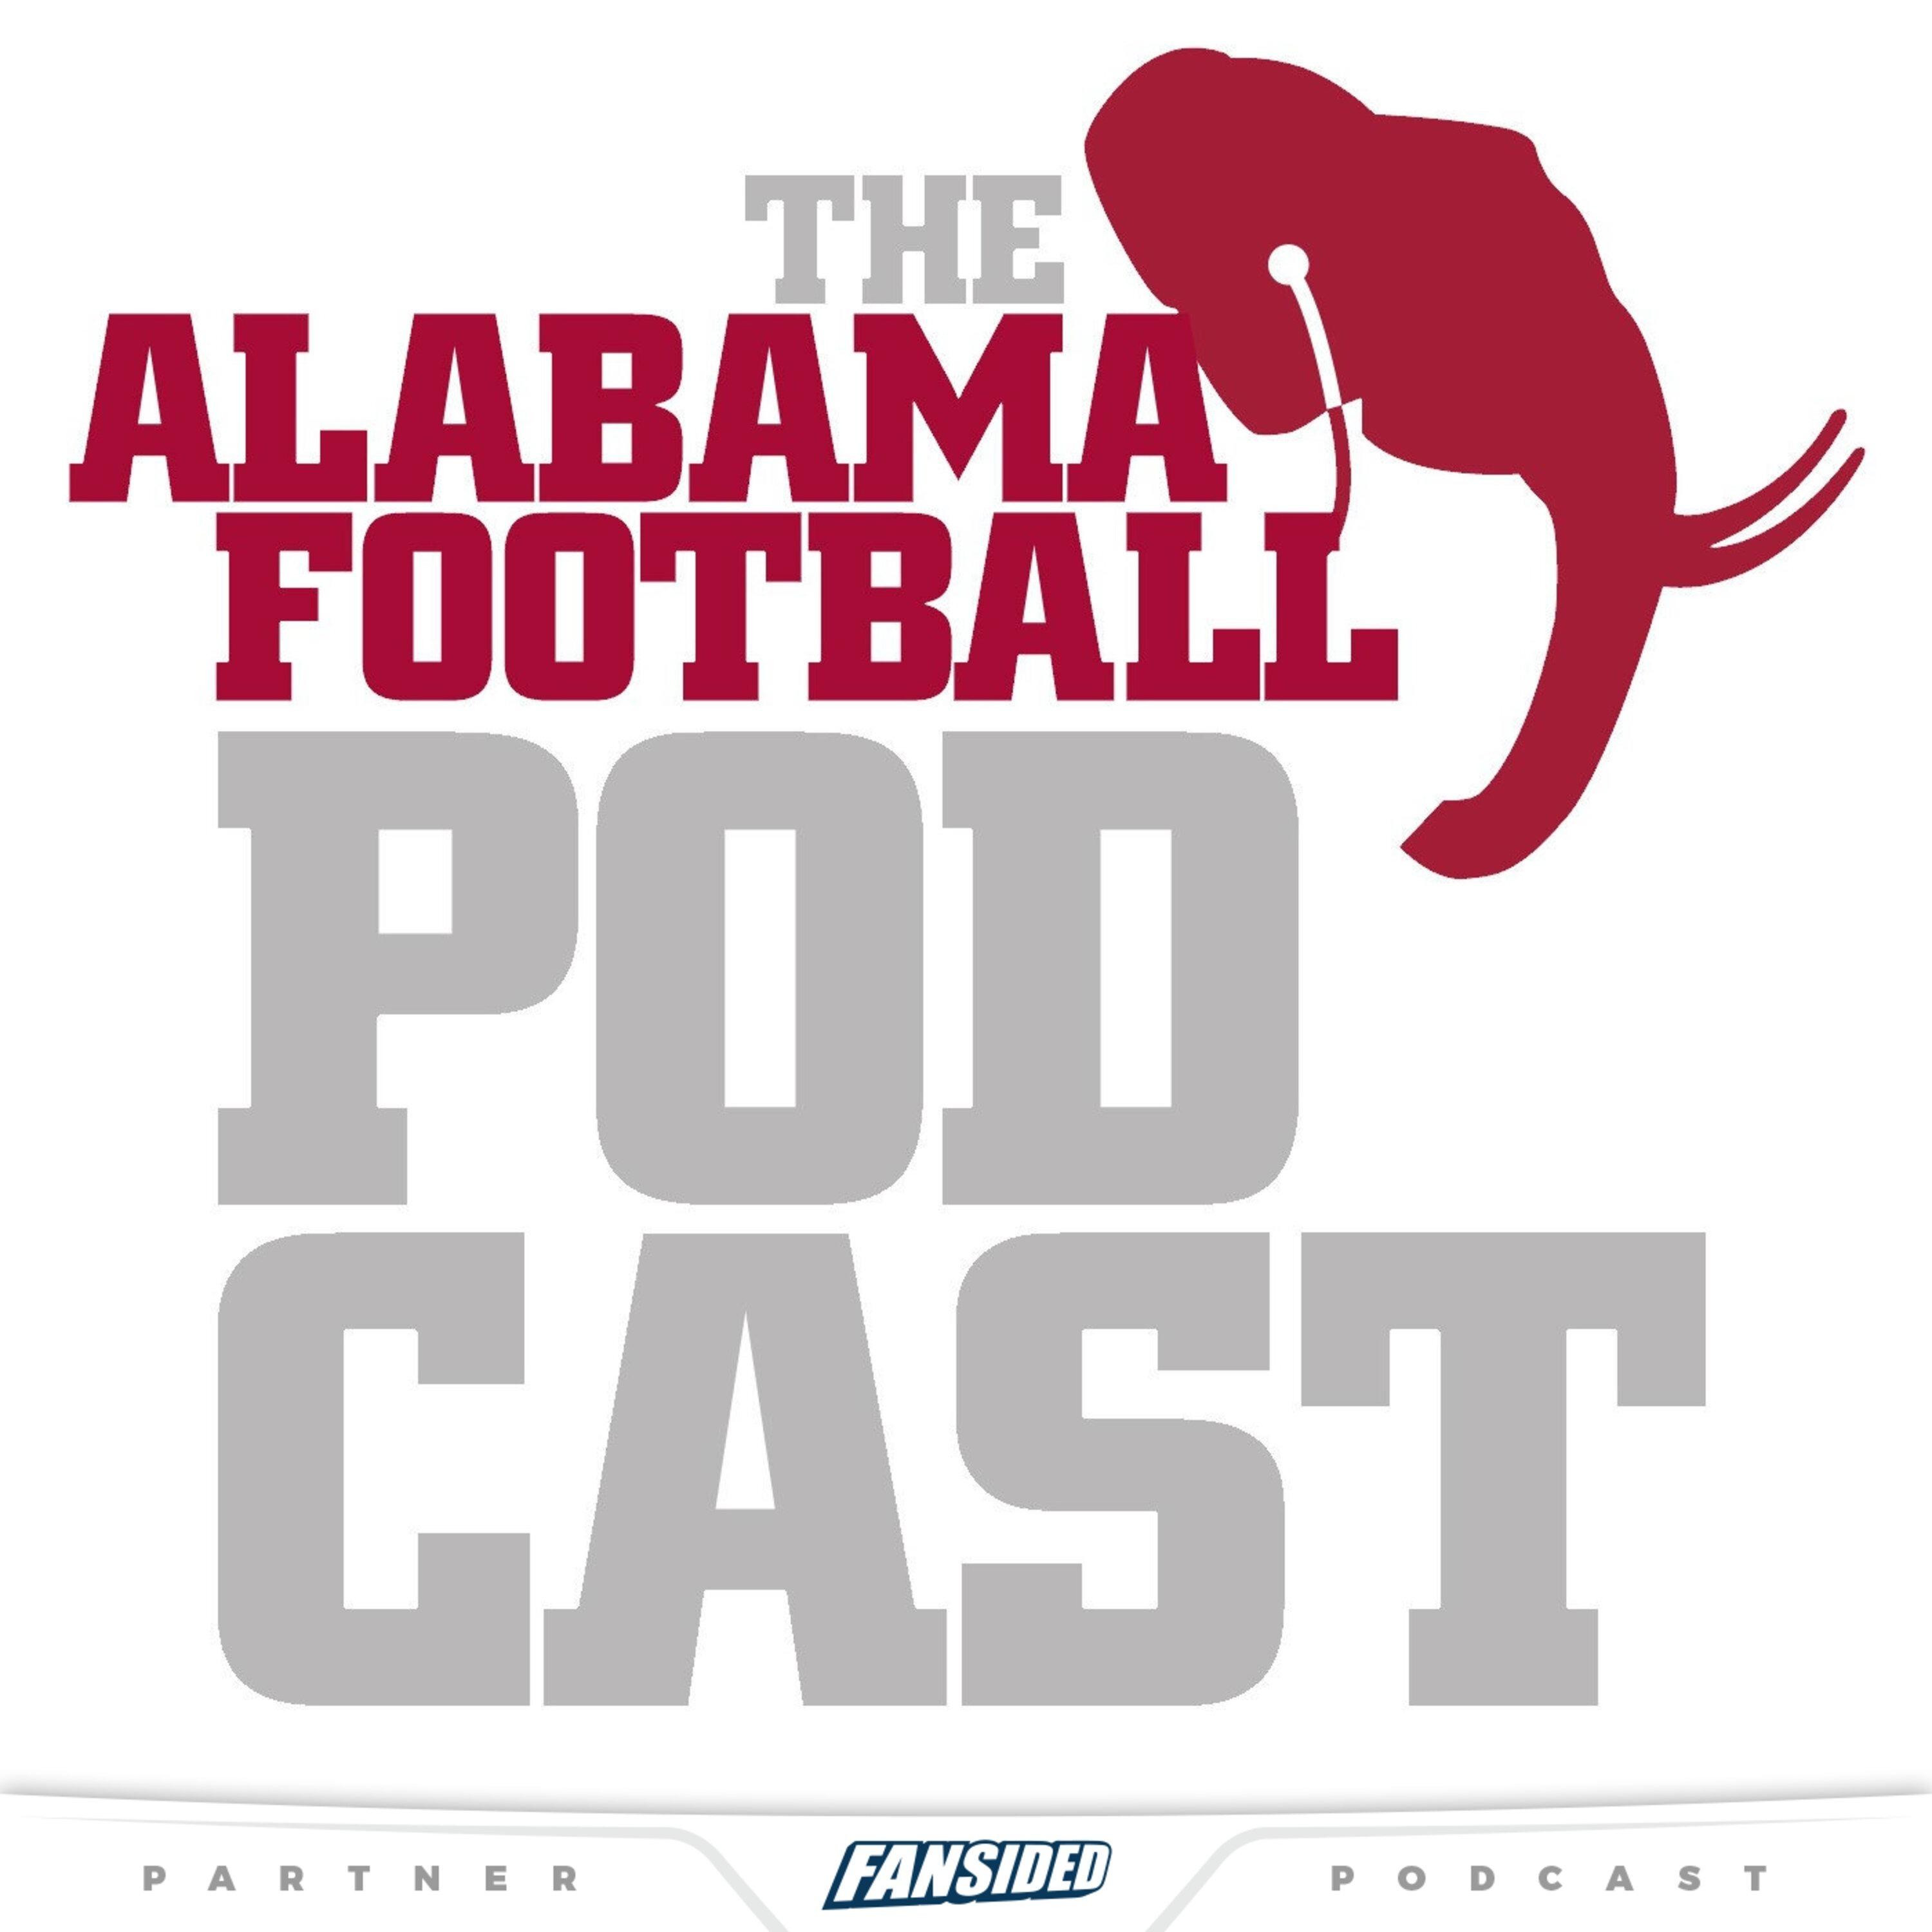 Alabama Football Podcast - College Football Talk dedicated to the Alabama Crimson Tide